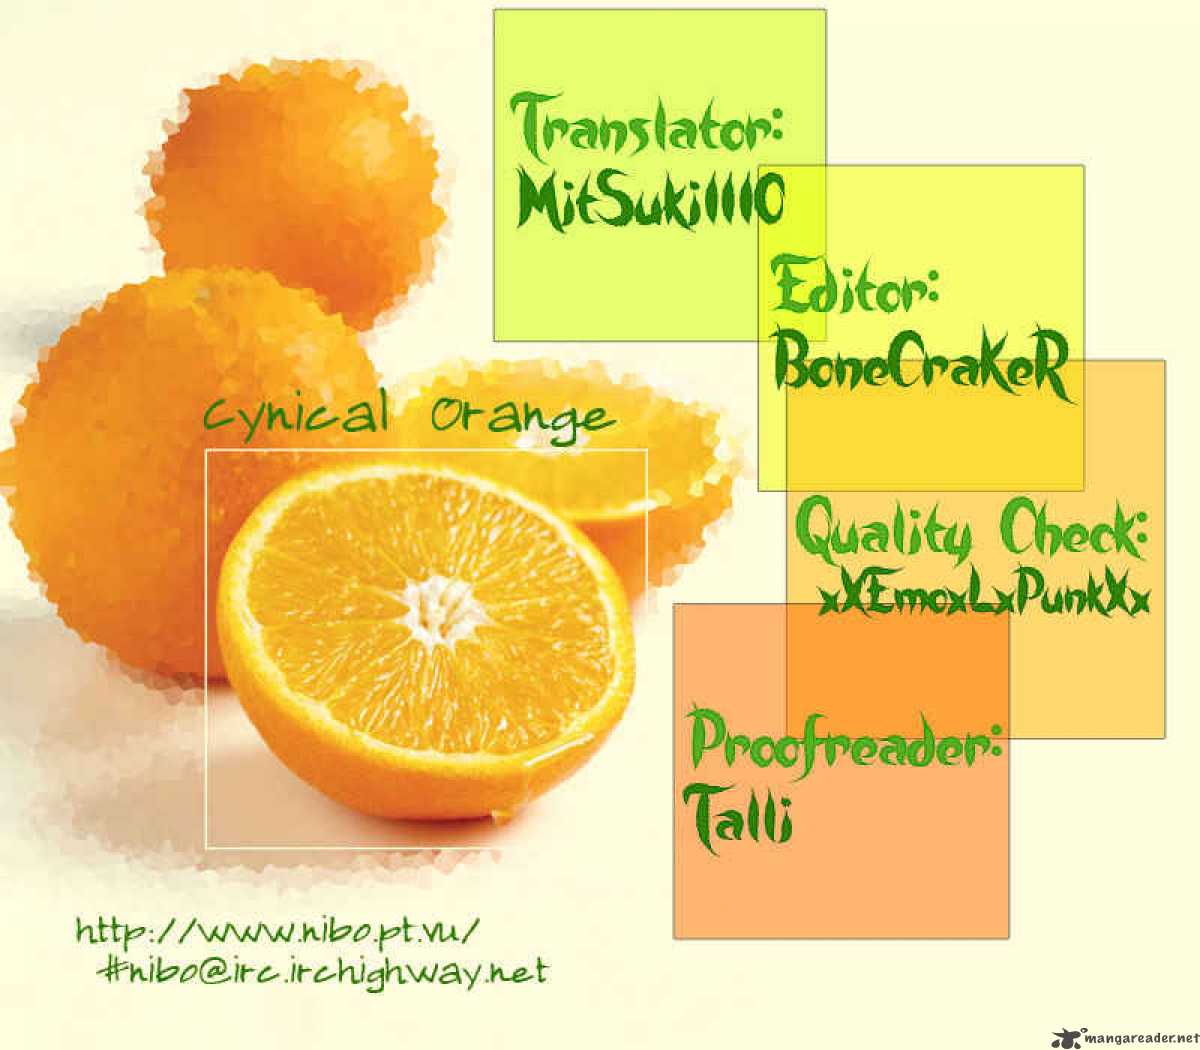 Cynical Orange 1 1